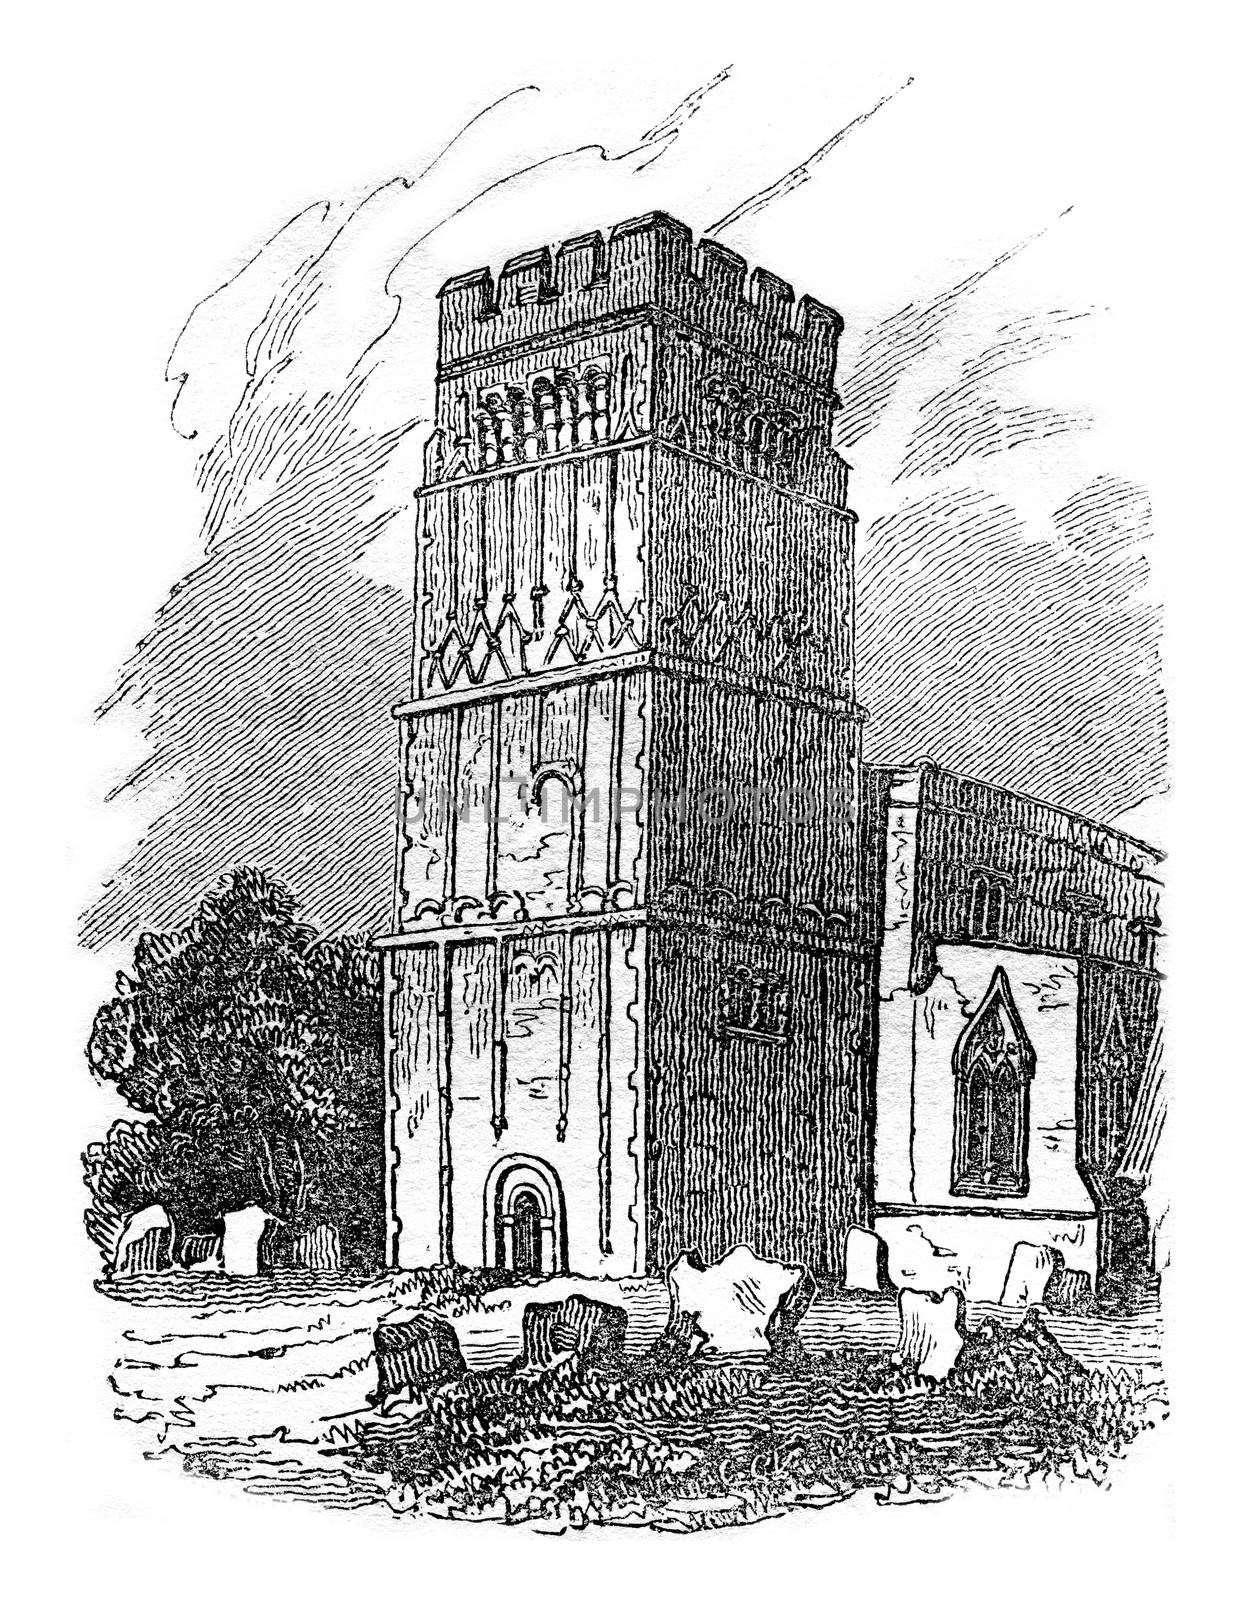 Tower of Earls Barton, Northamptonshire, vintage engraved illustration. Colorful History of England, 1837.
